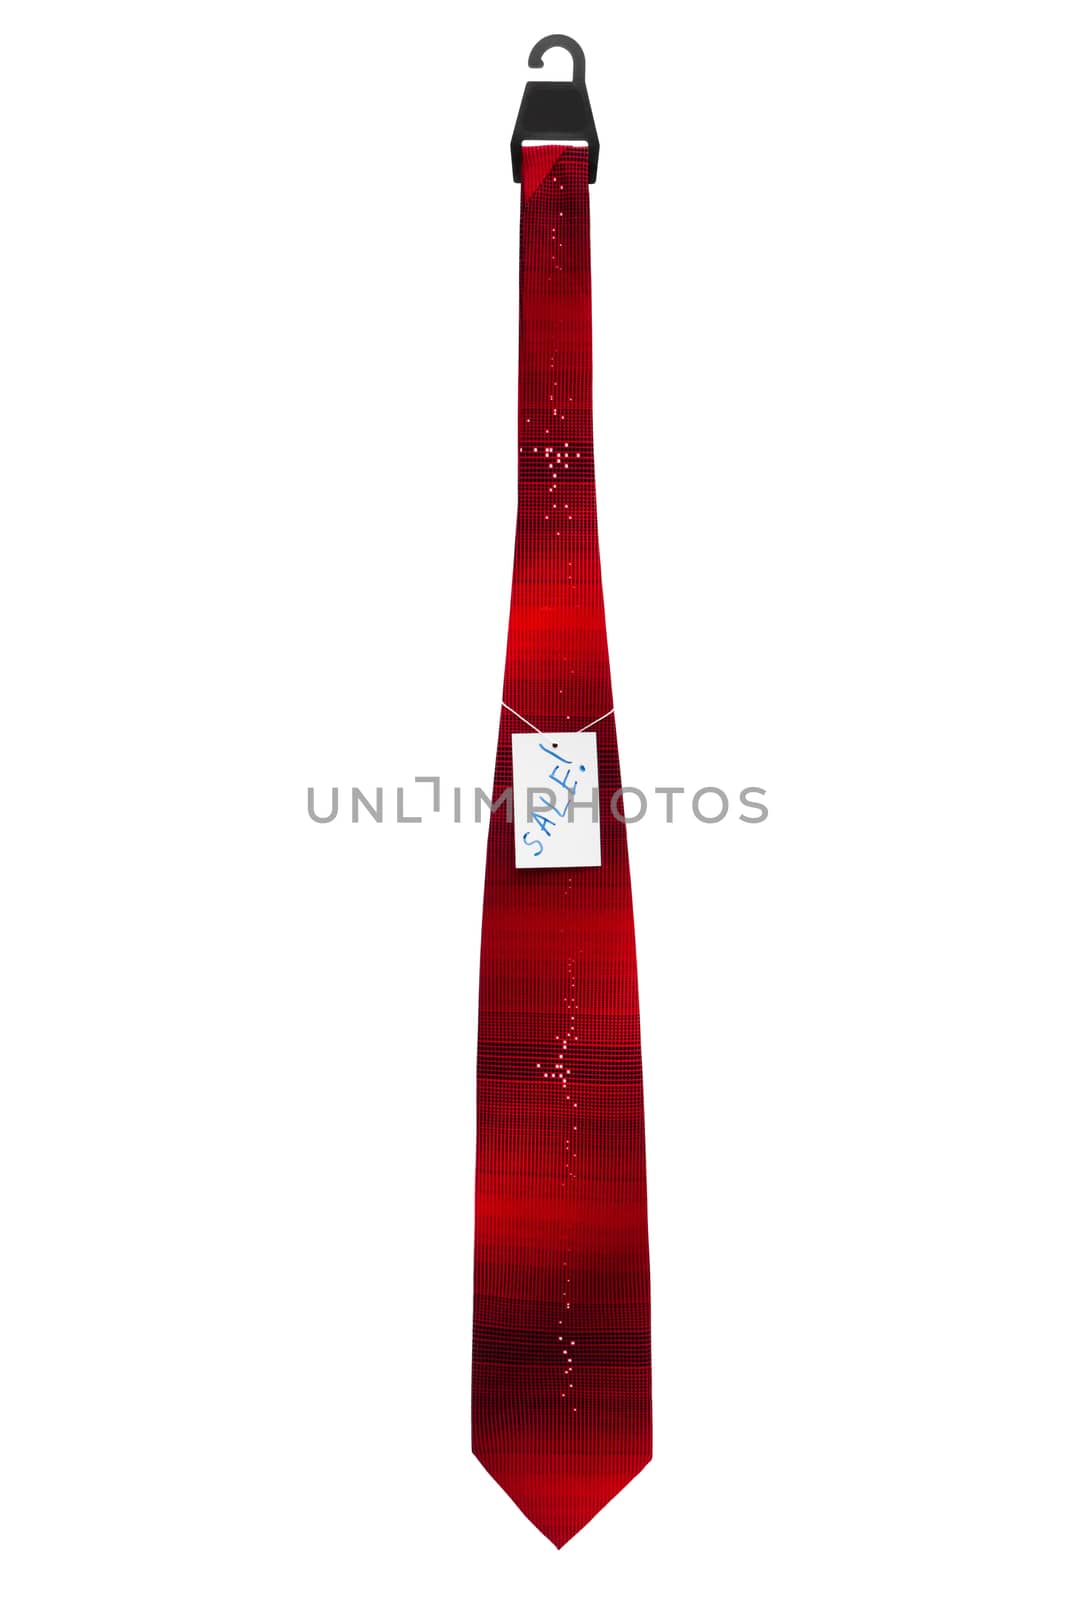 red striped necktie on a white background